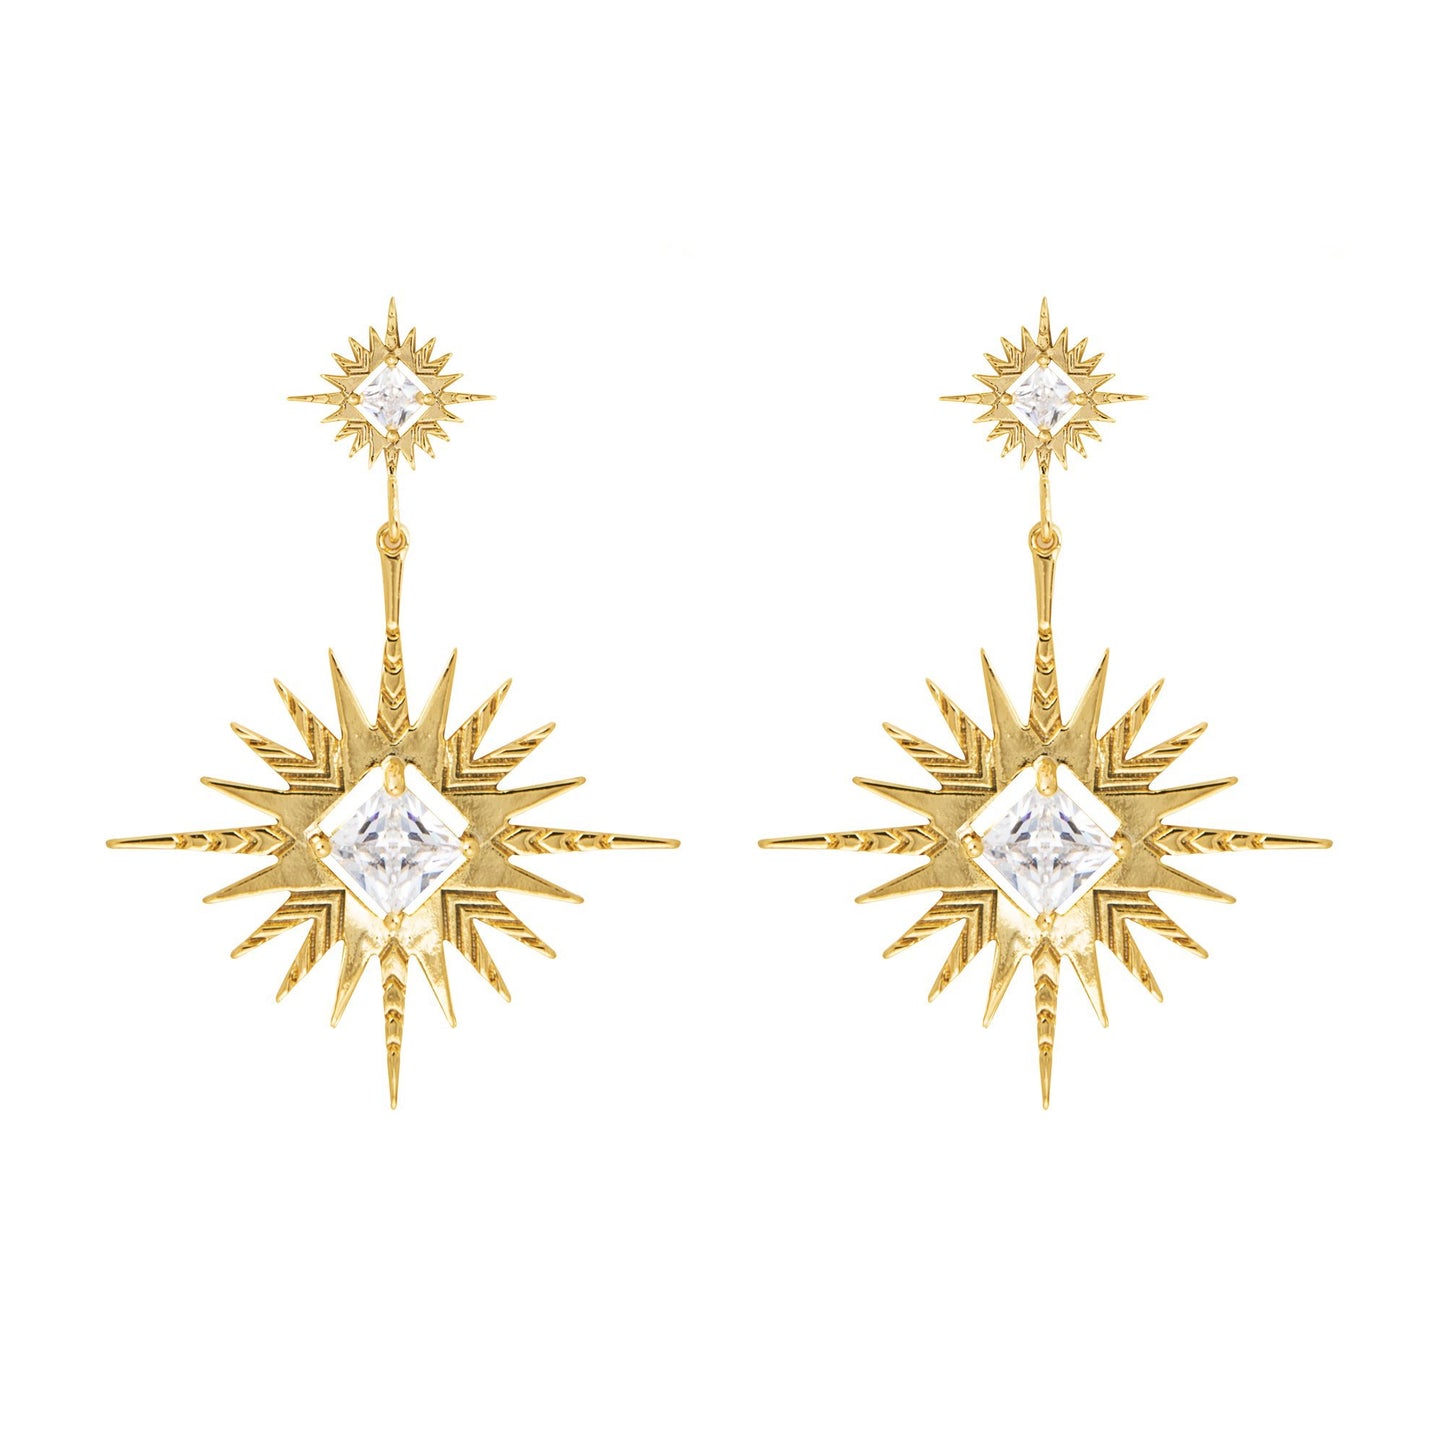 A Dusting of Jewels - Solar Earrings | Gold